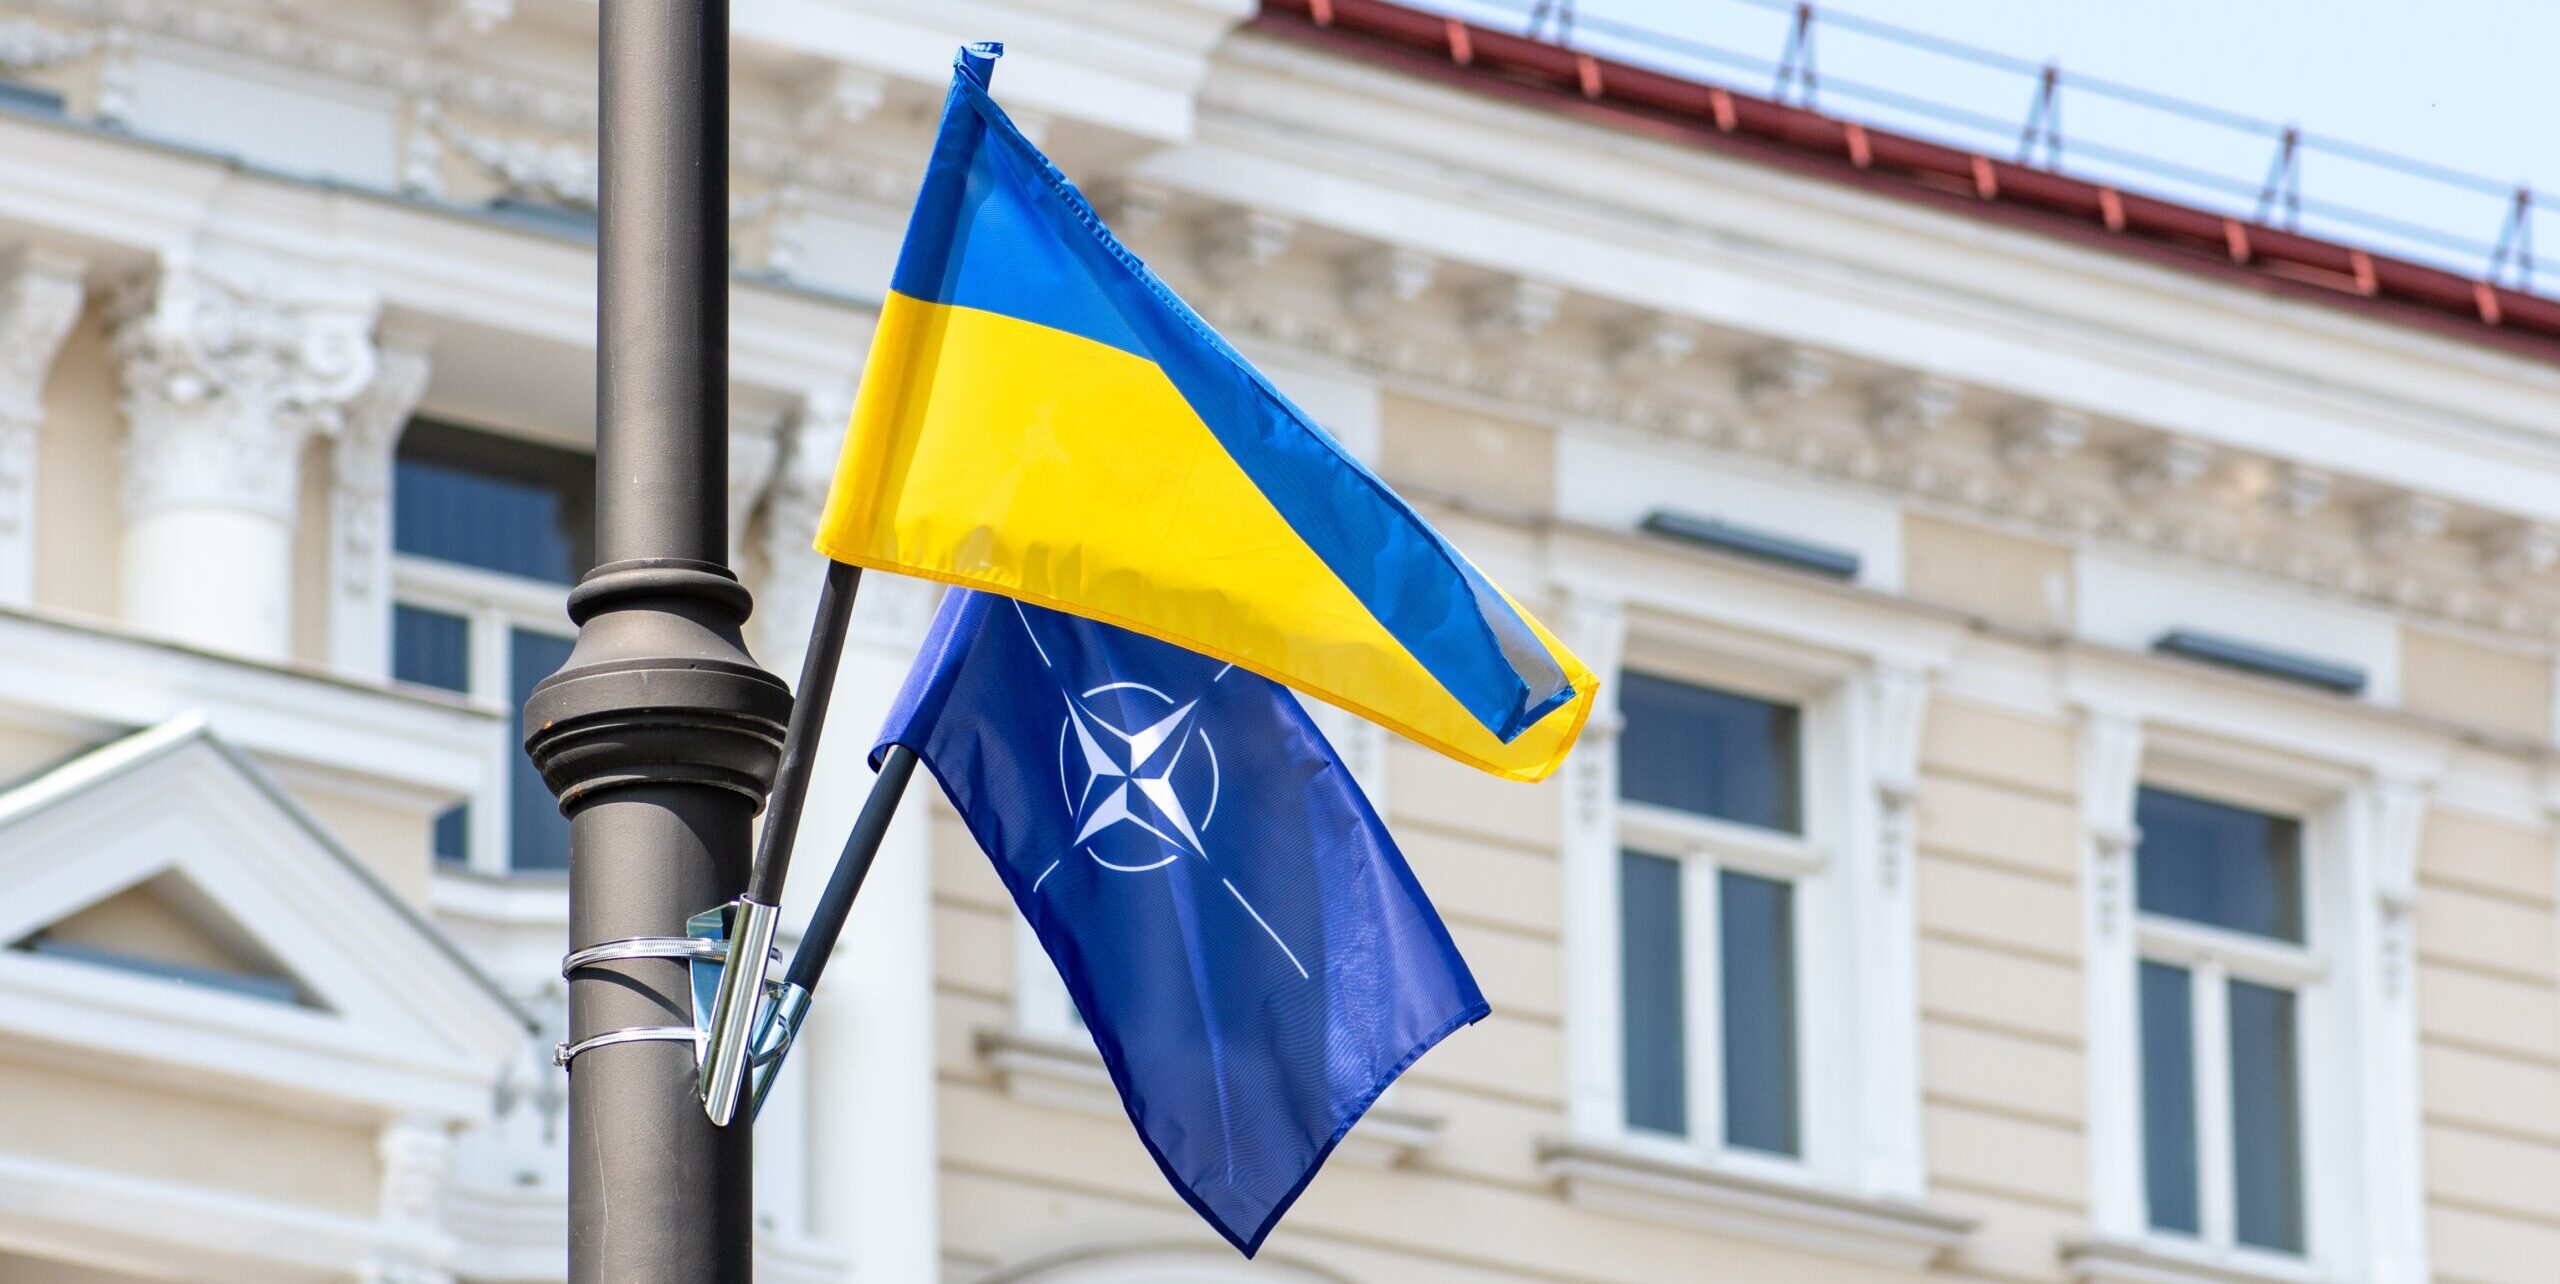 NATO member states’ Ambassadors: Ukraine needs clear path to Alliance membership